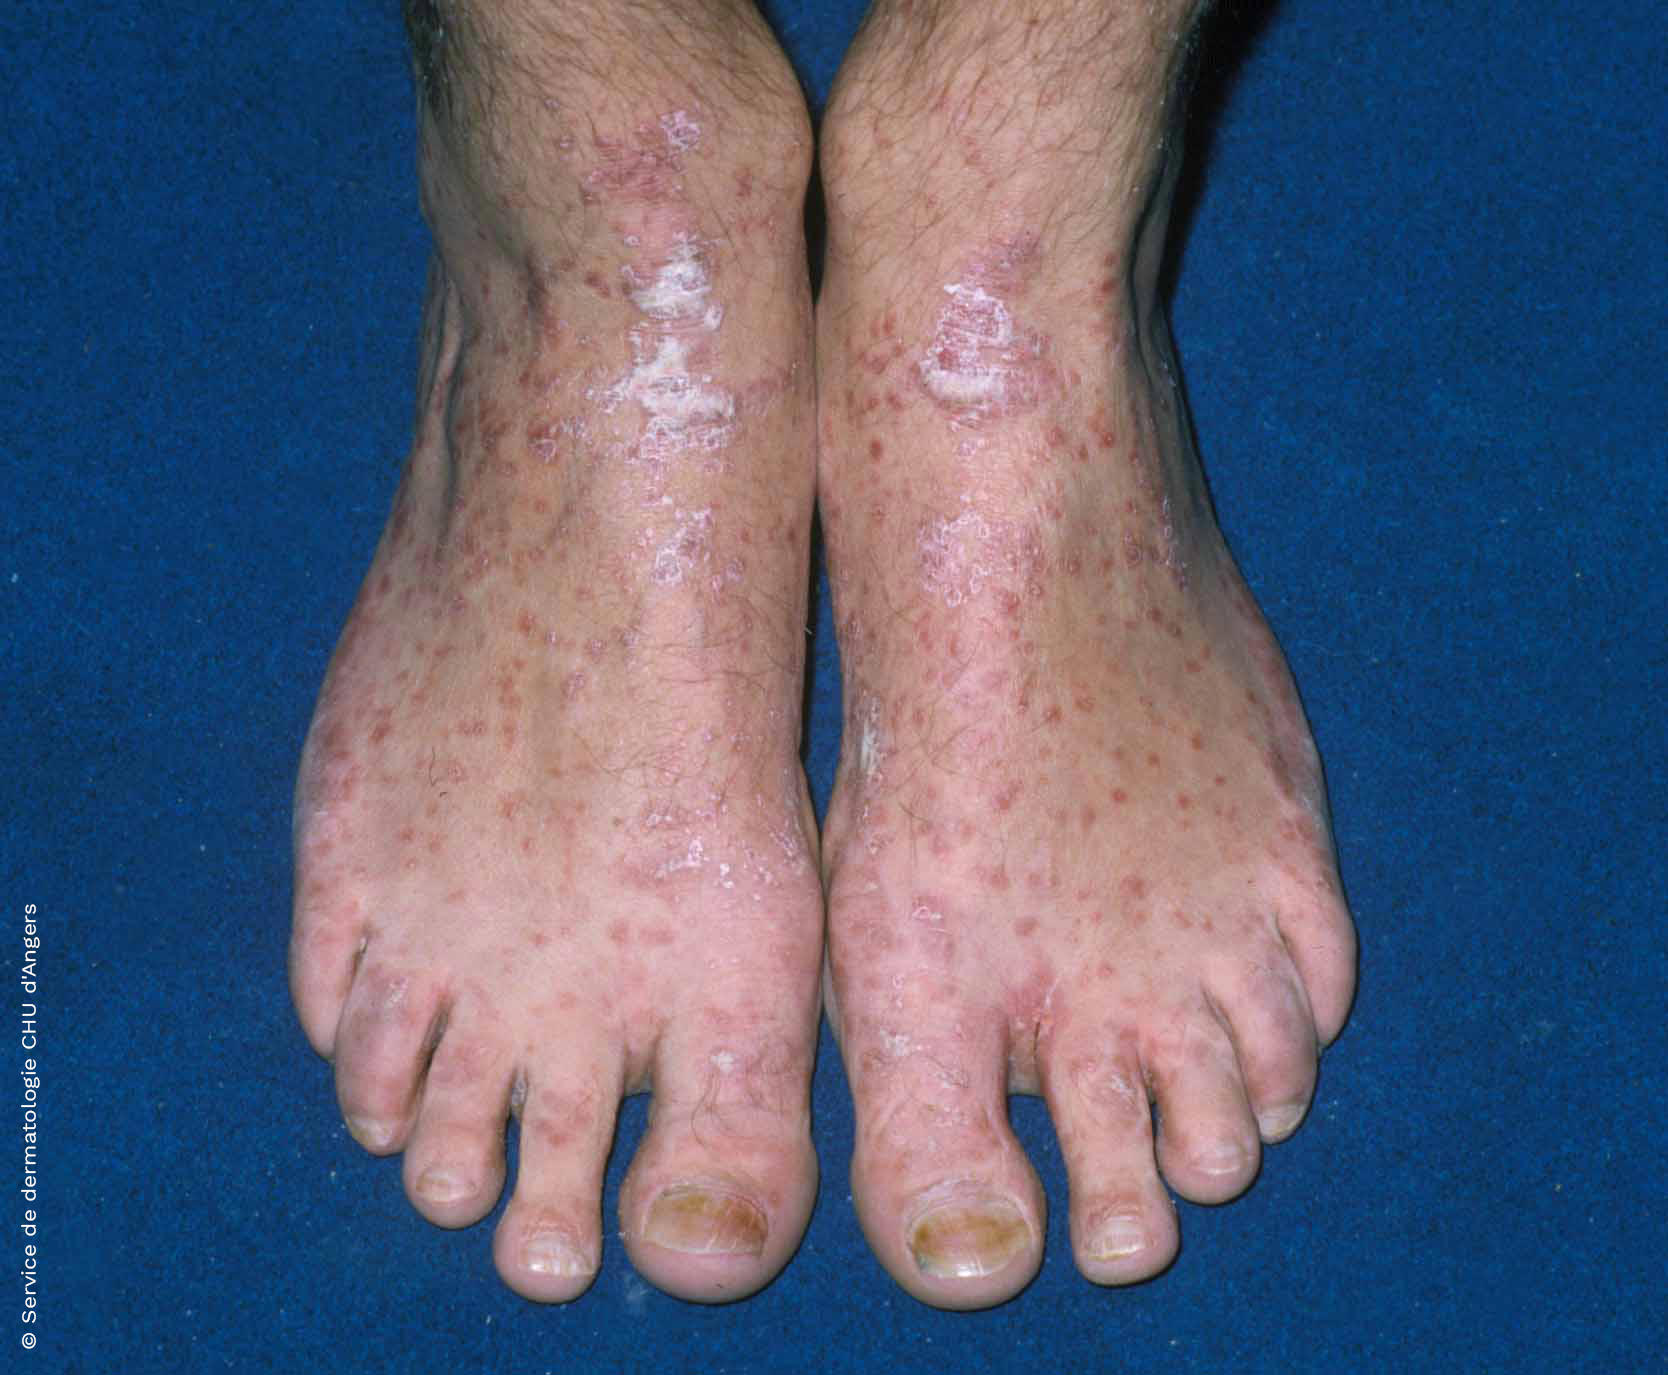 eczema vs psoriasis on feet